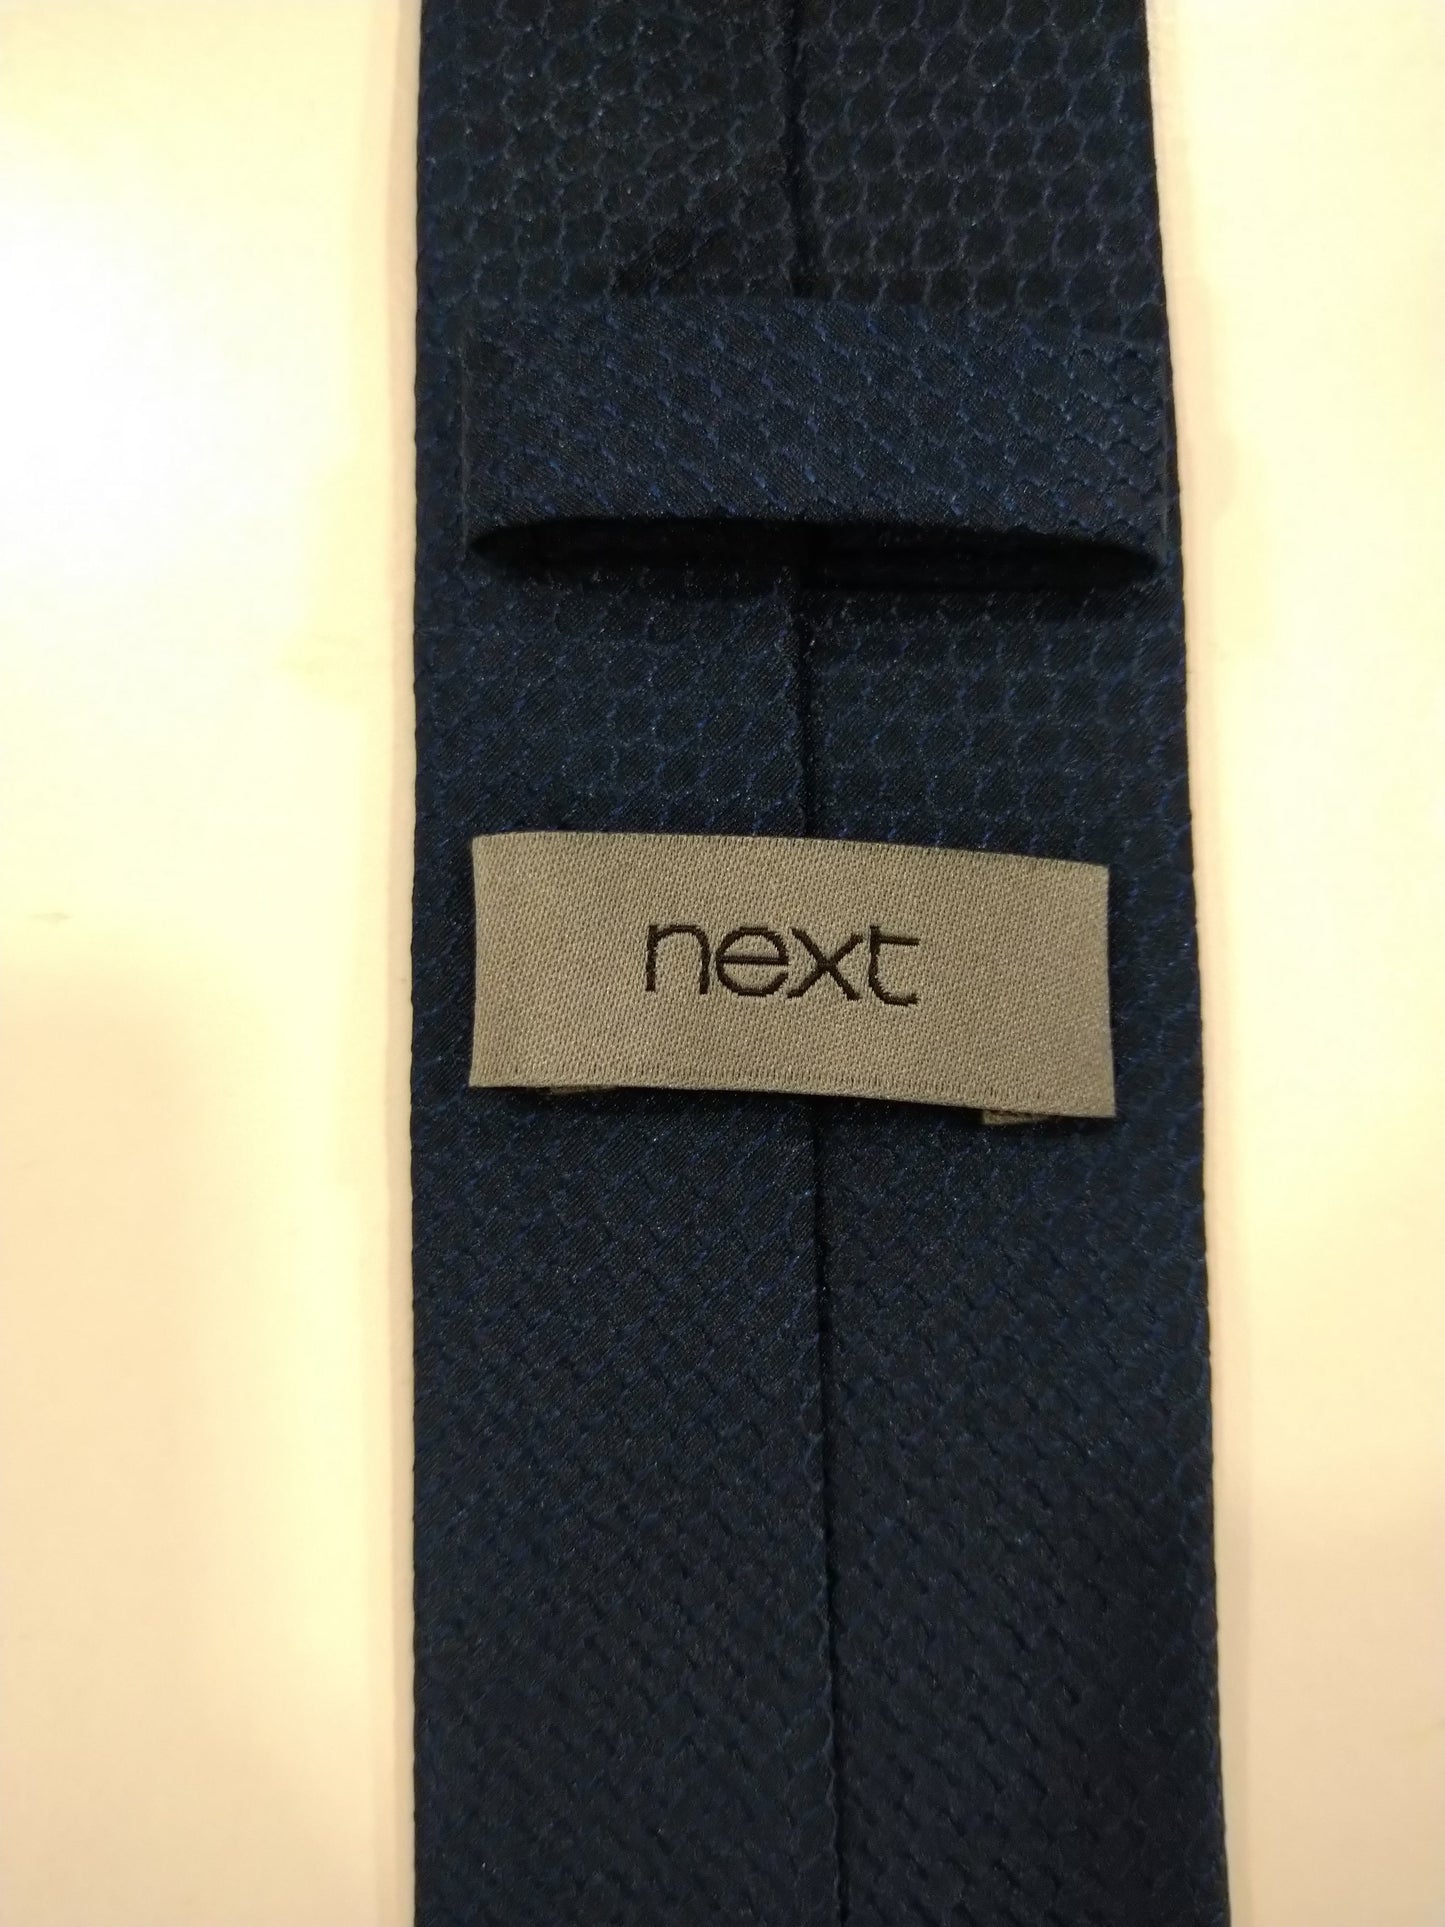 Siguiente corbata de poliéster extra estrecho. Motivo azul.